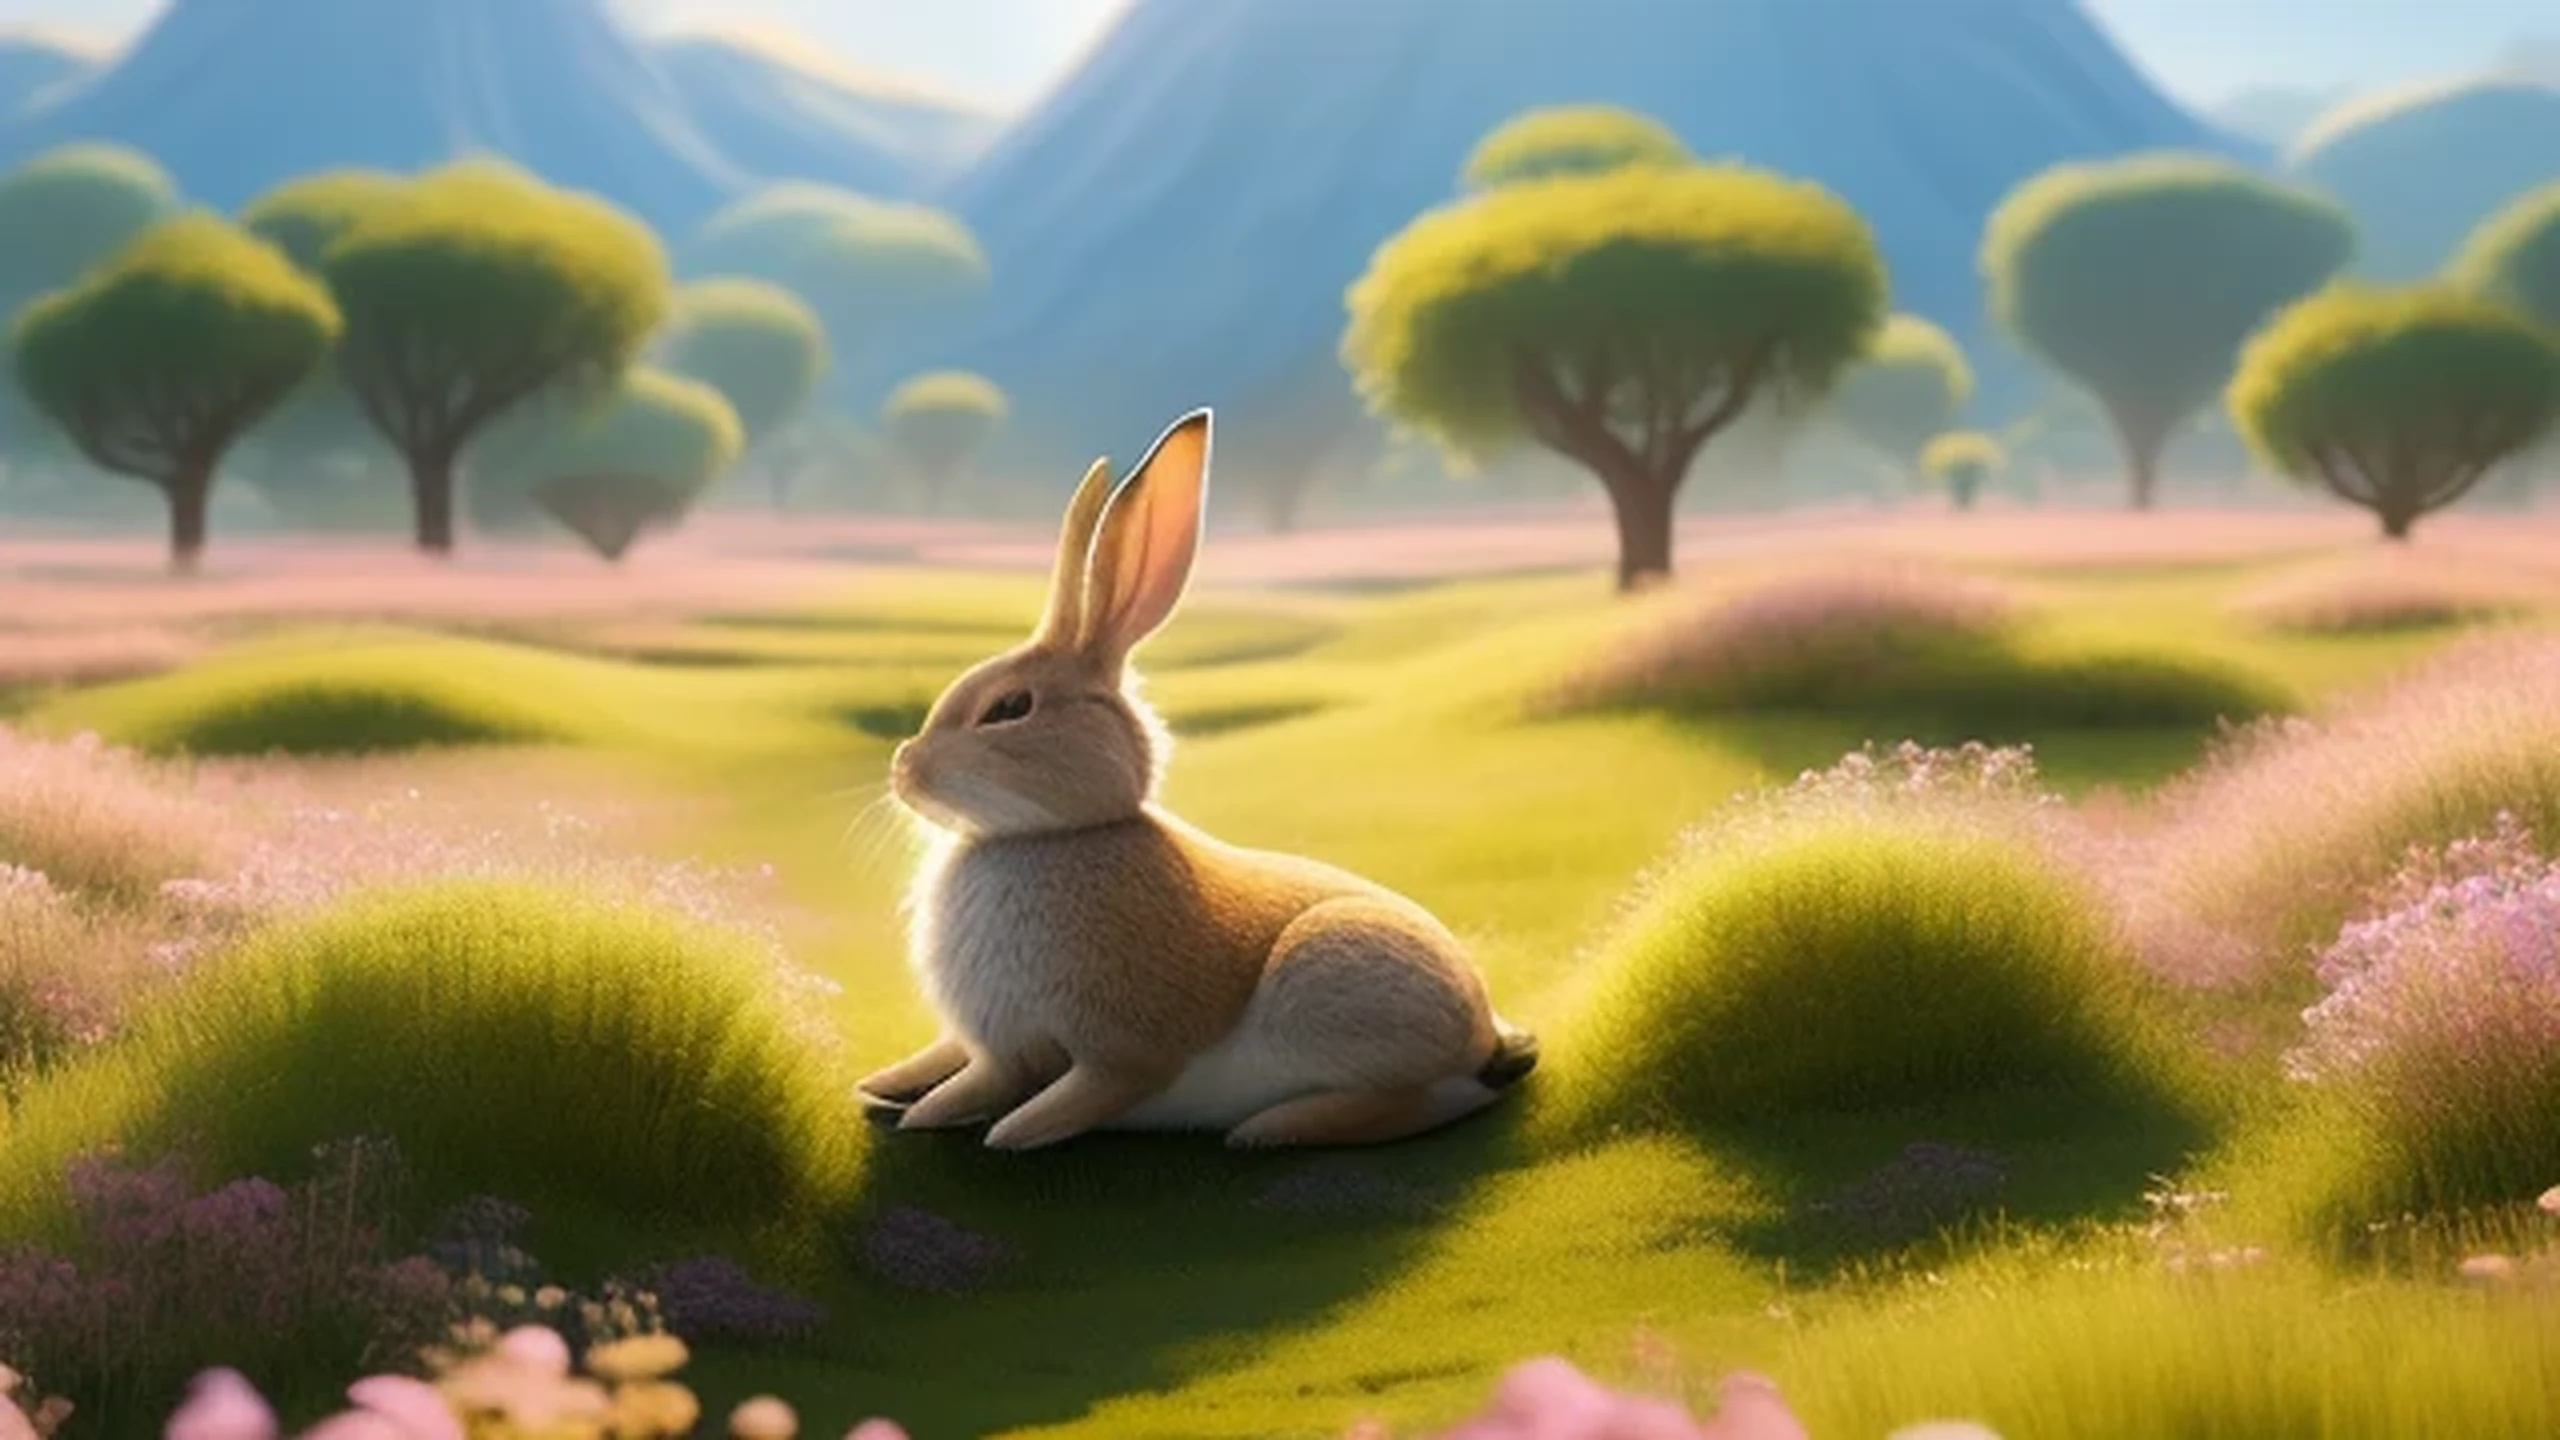 A rabbit takes a nap in the alfalfa.